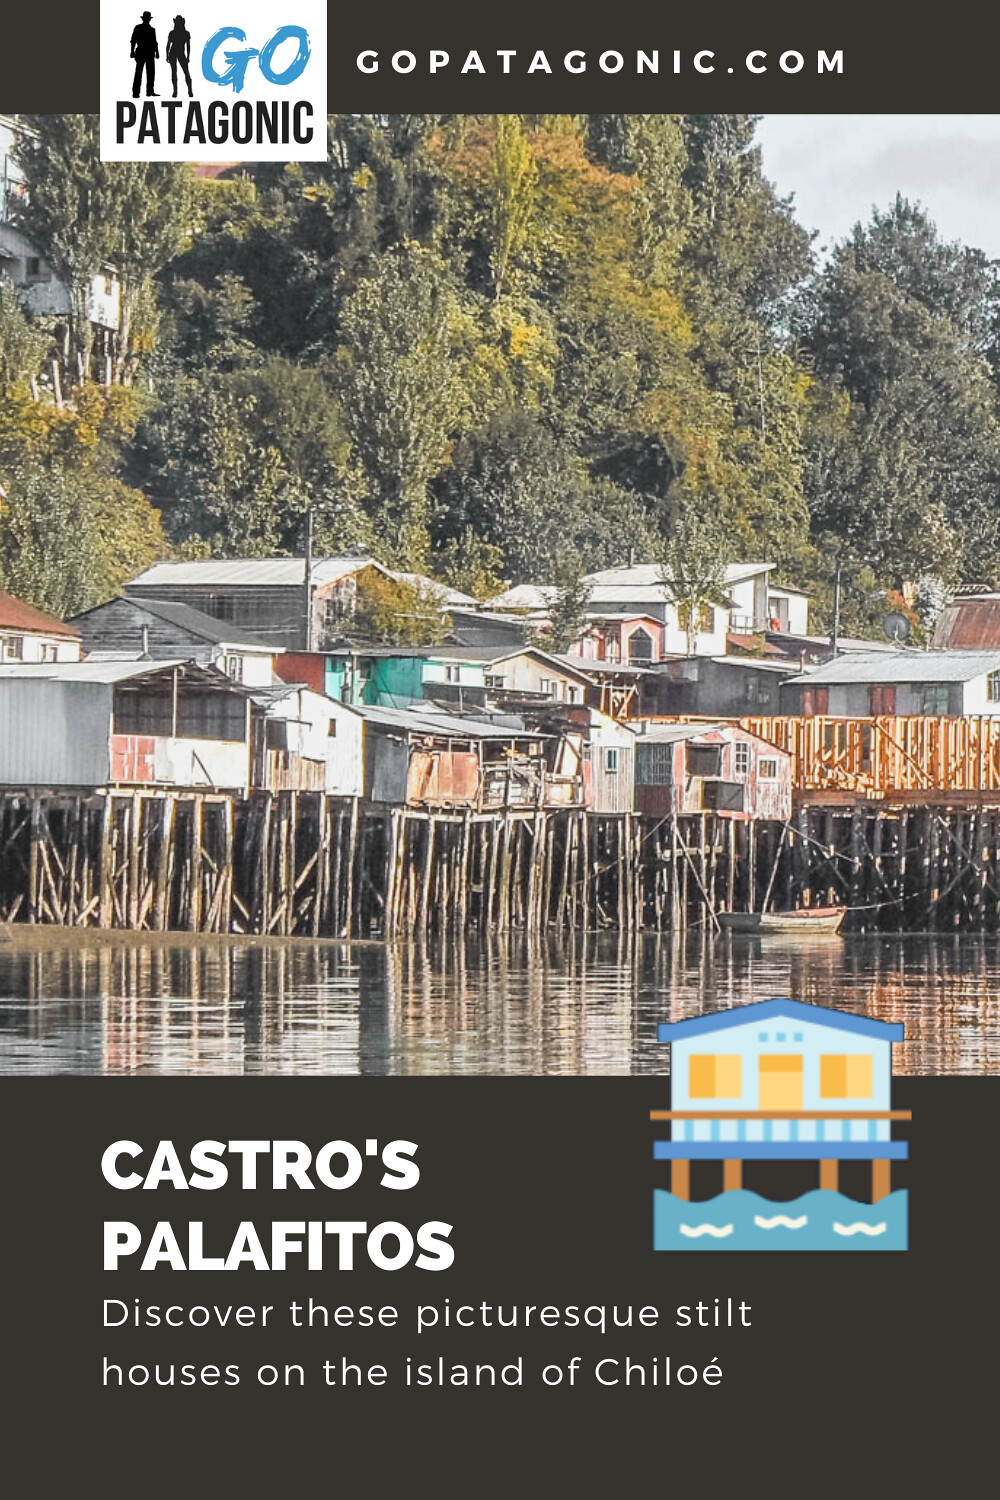 Visiting the palafitos of Castro